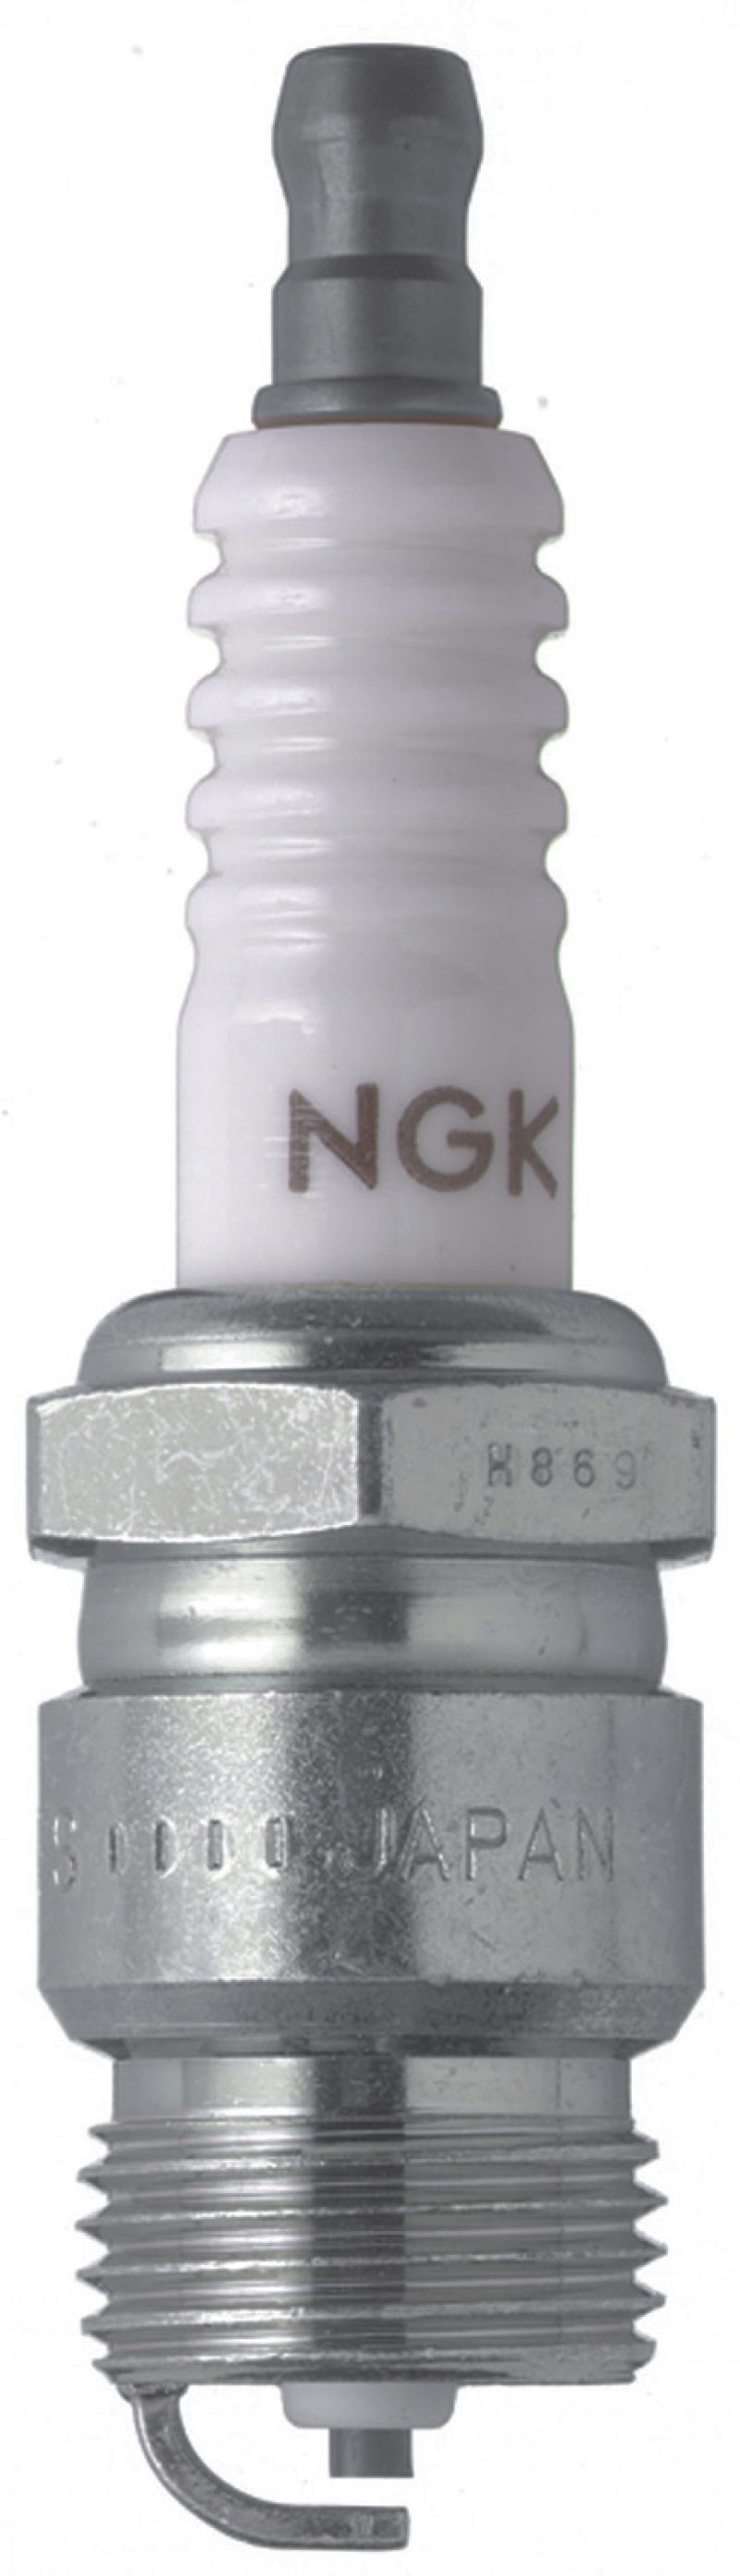 NGK Standard Spark Plug Box of 1 (AP8FS)